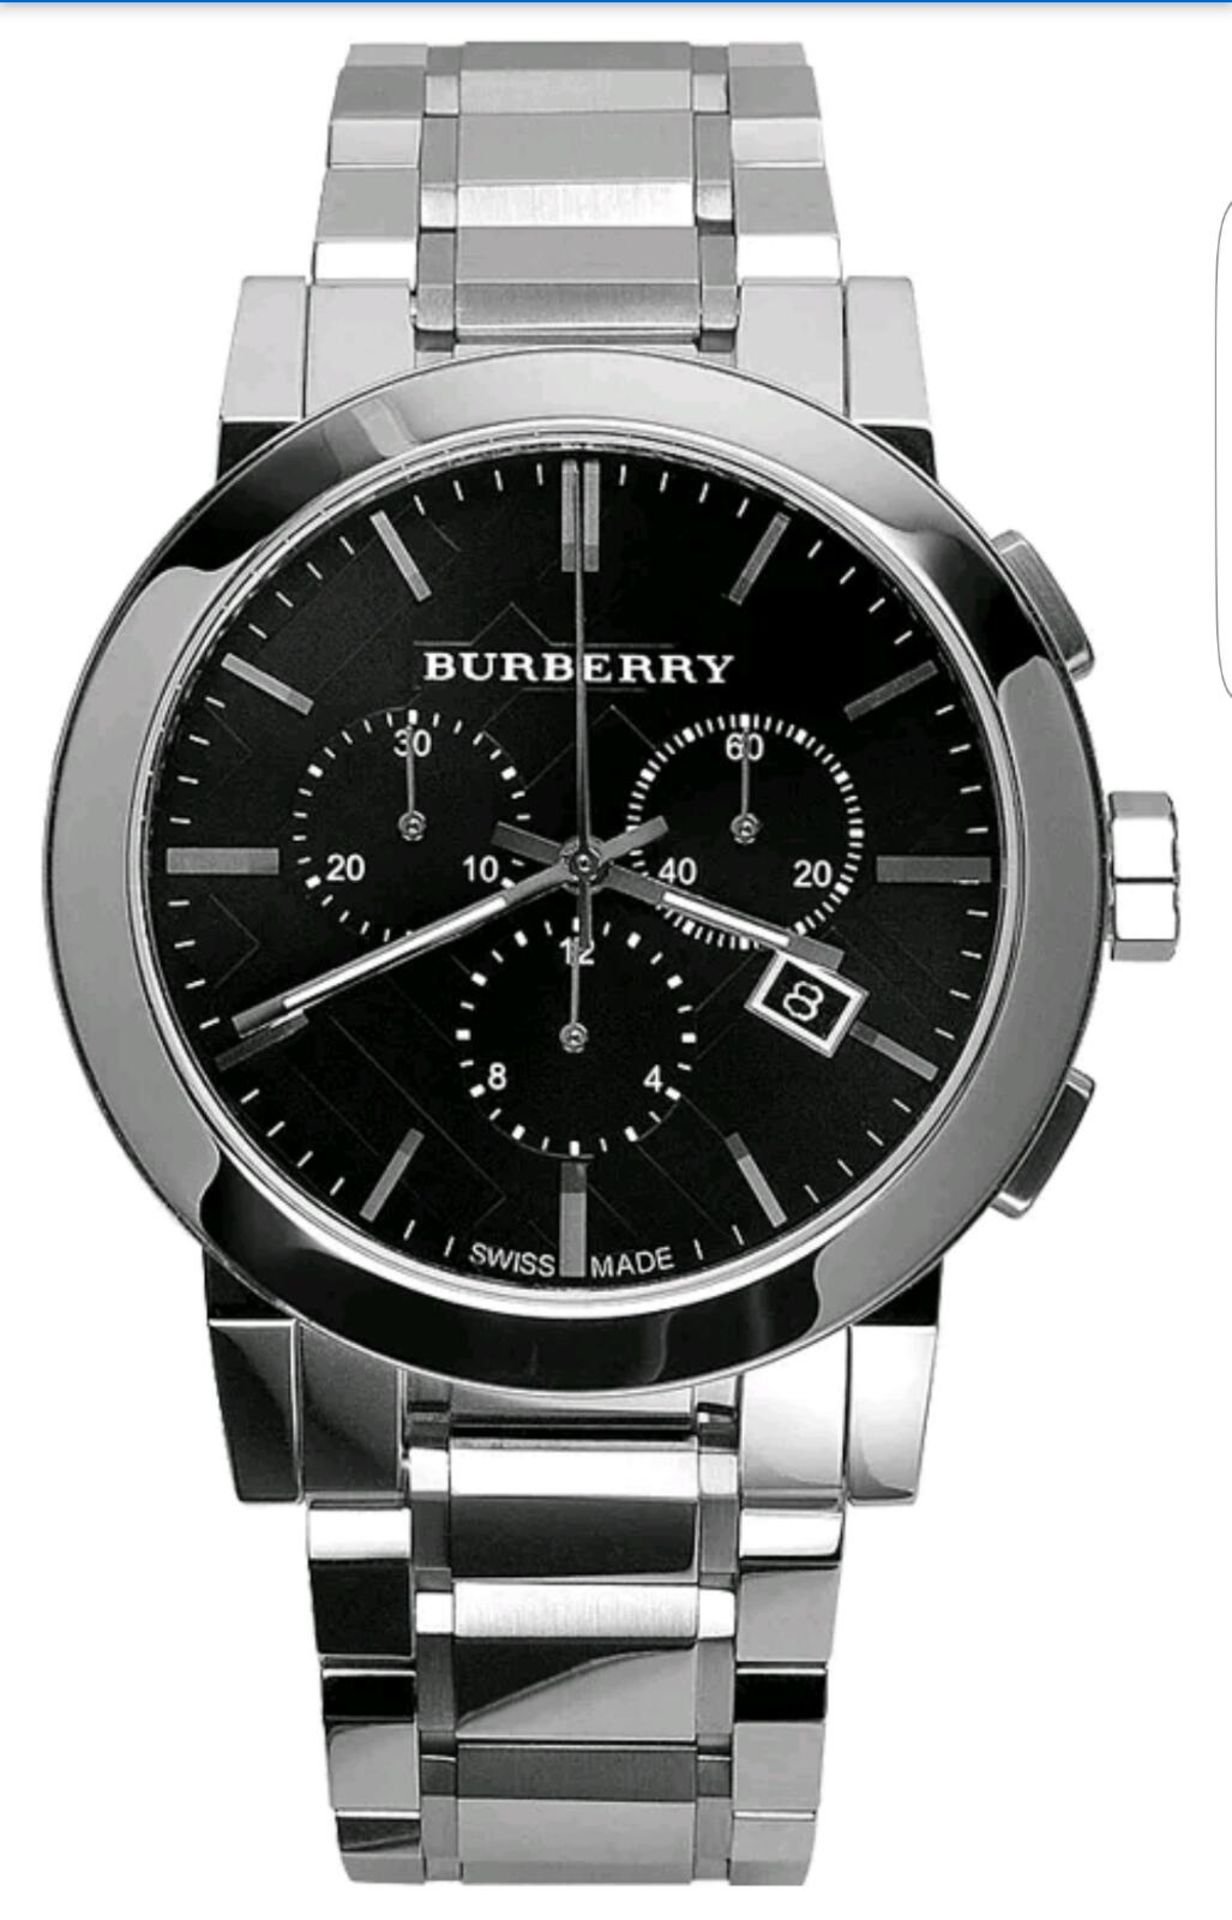 Brand New Burberry BU9351 Gents Designer Watch - Complete With Original Burberry Box & Manual